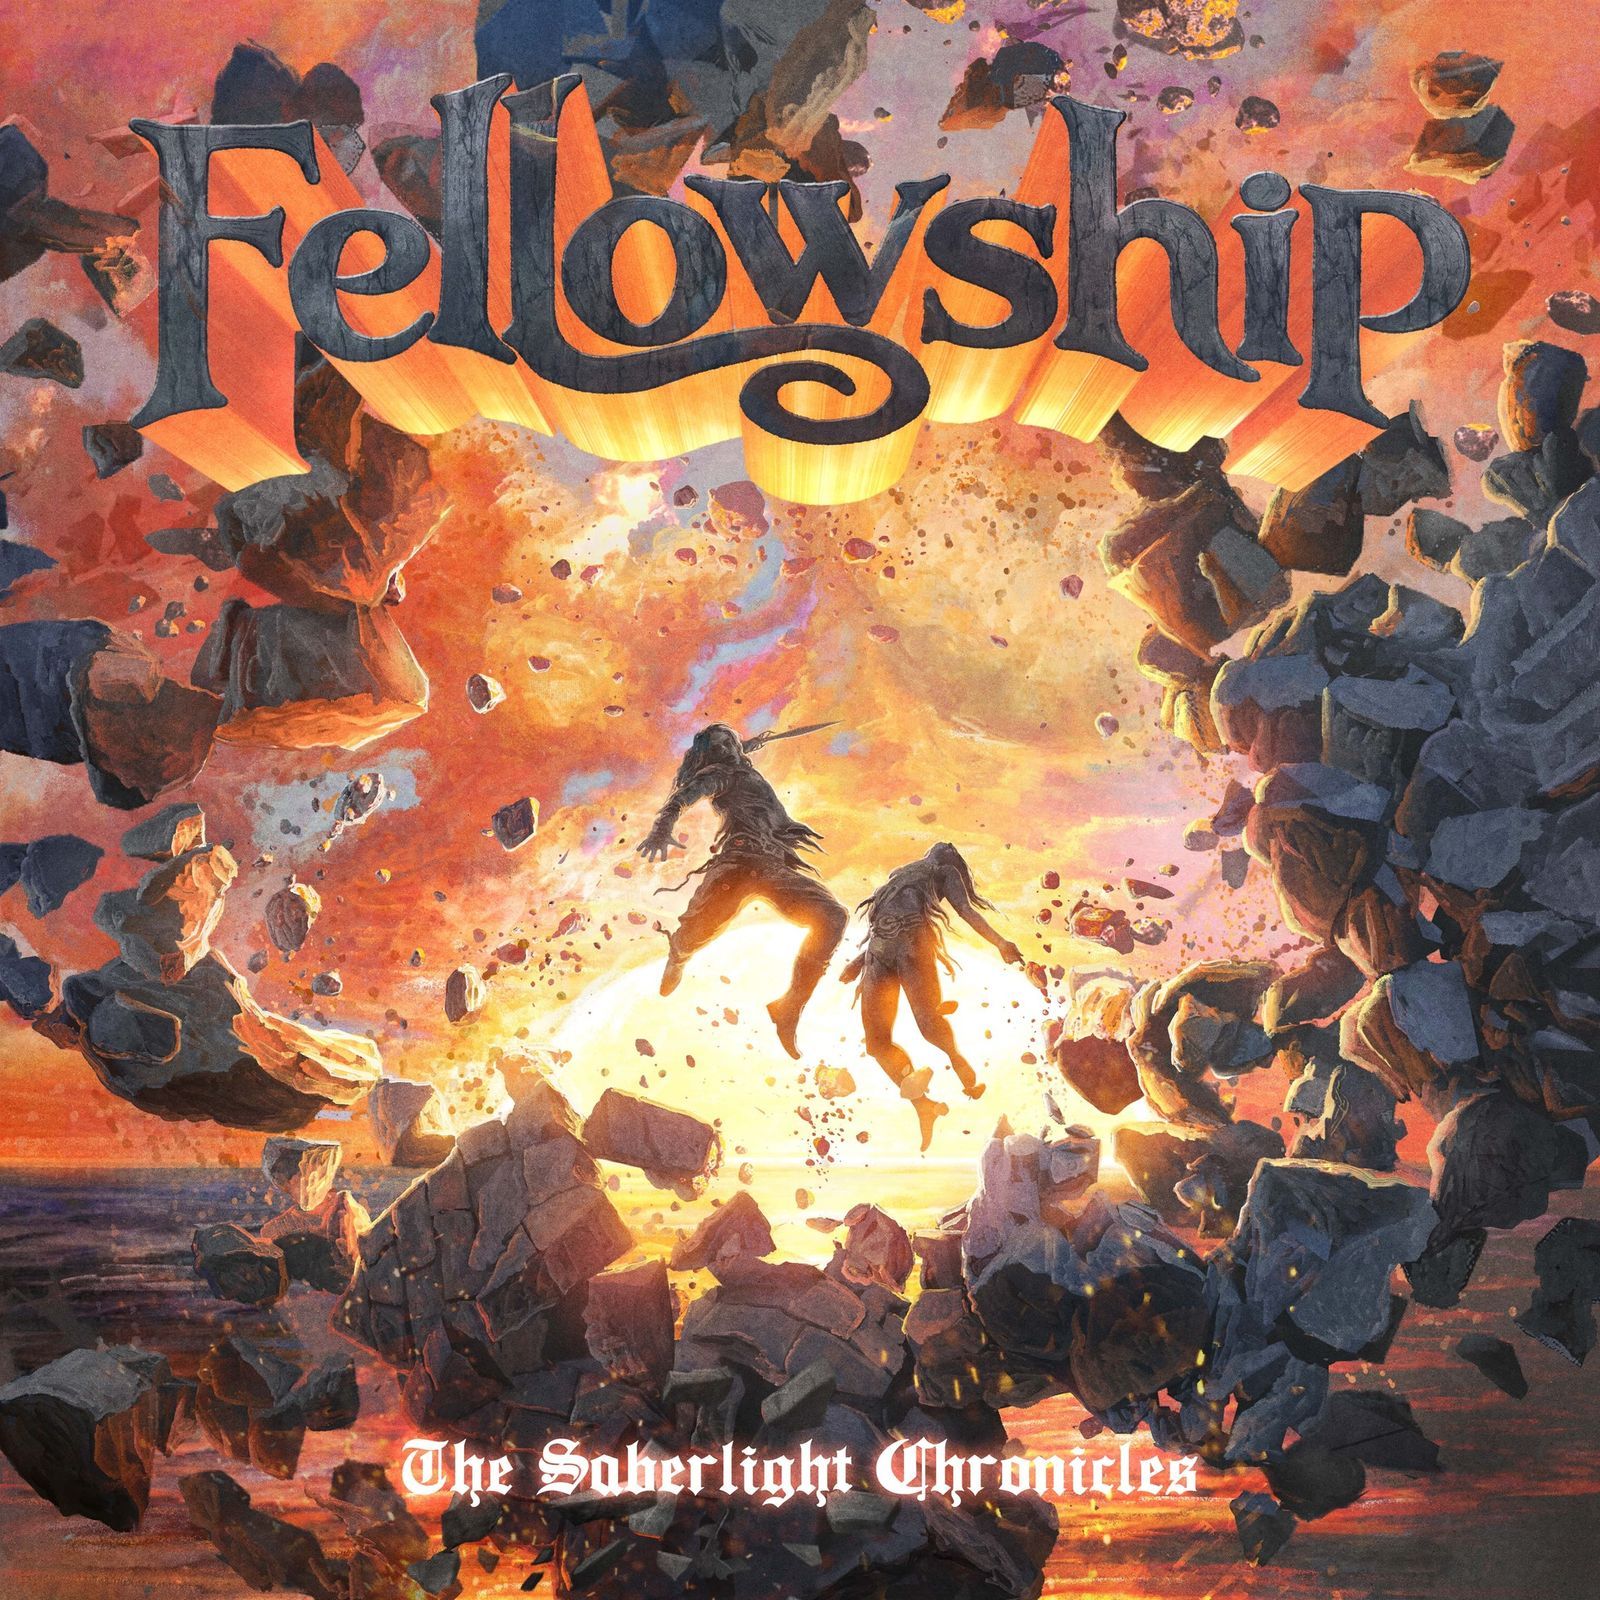 Fellowship - Until the Fires Die (clip)